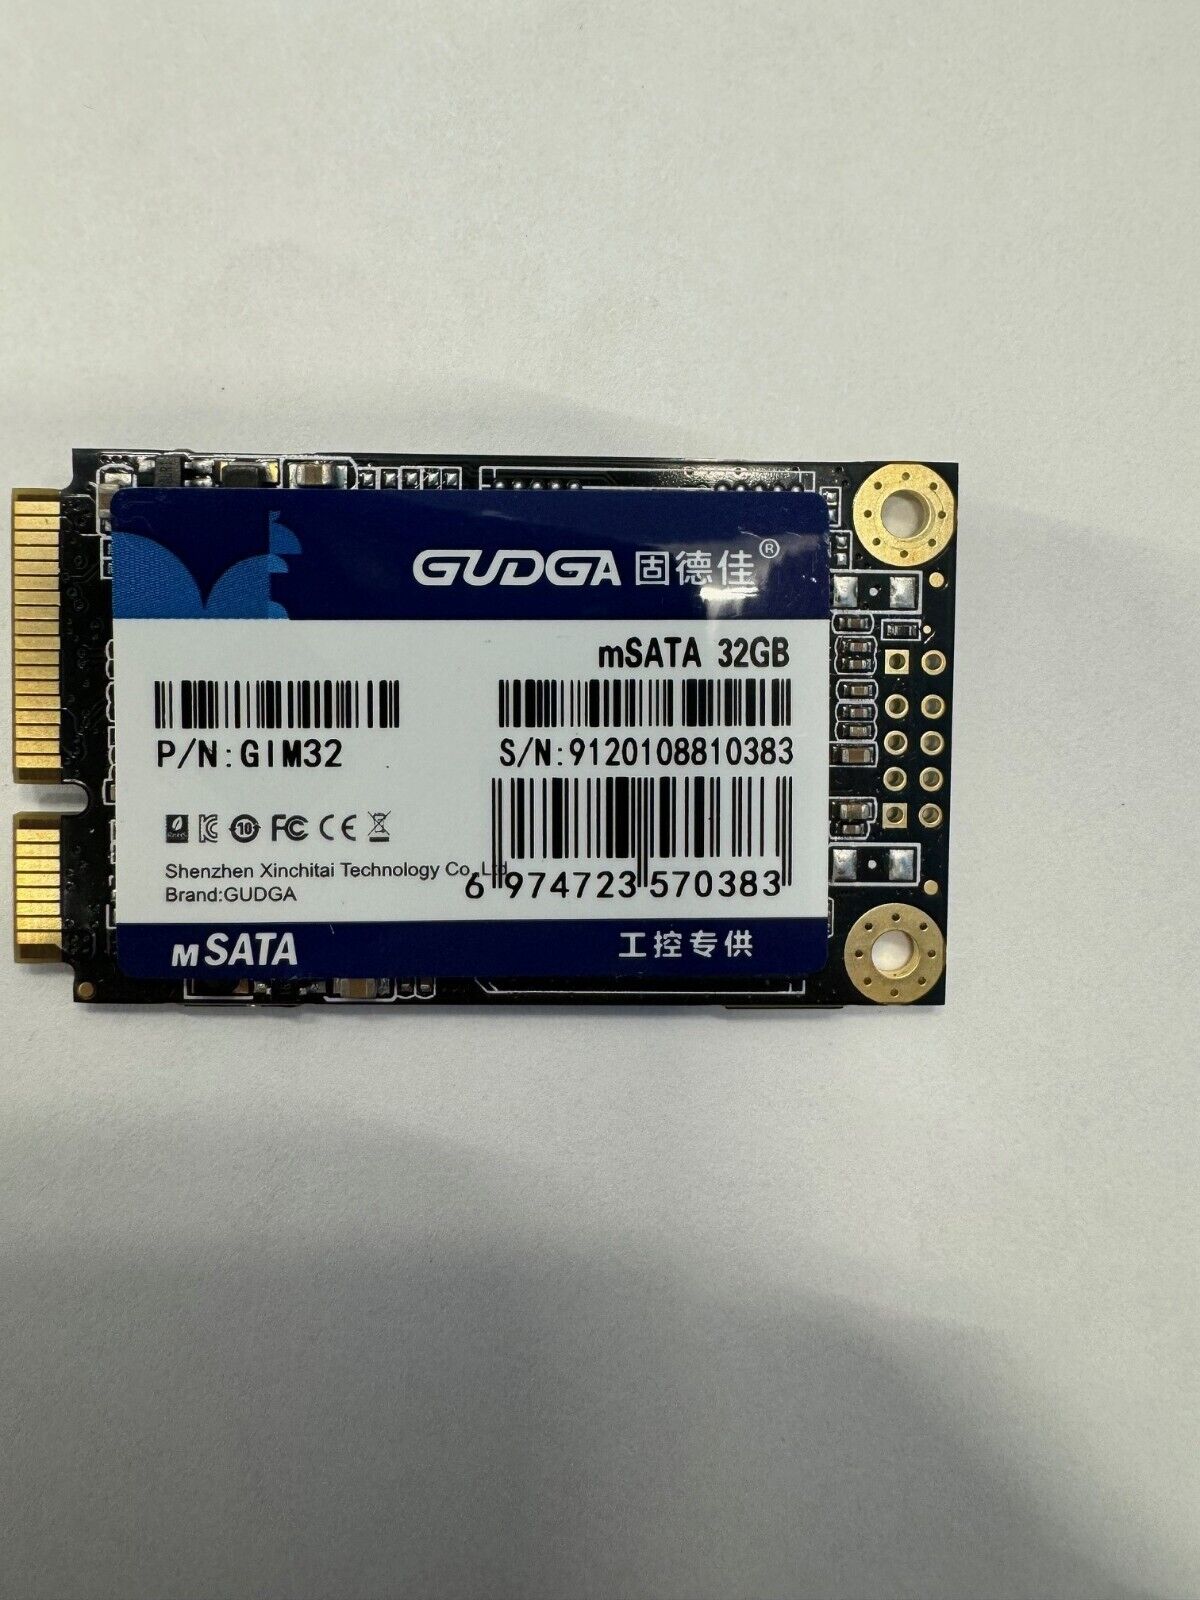 32GB mSATA 32GB GUDGA part# GIM32 - Pulled from new units